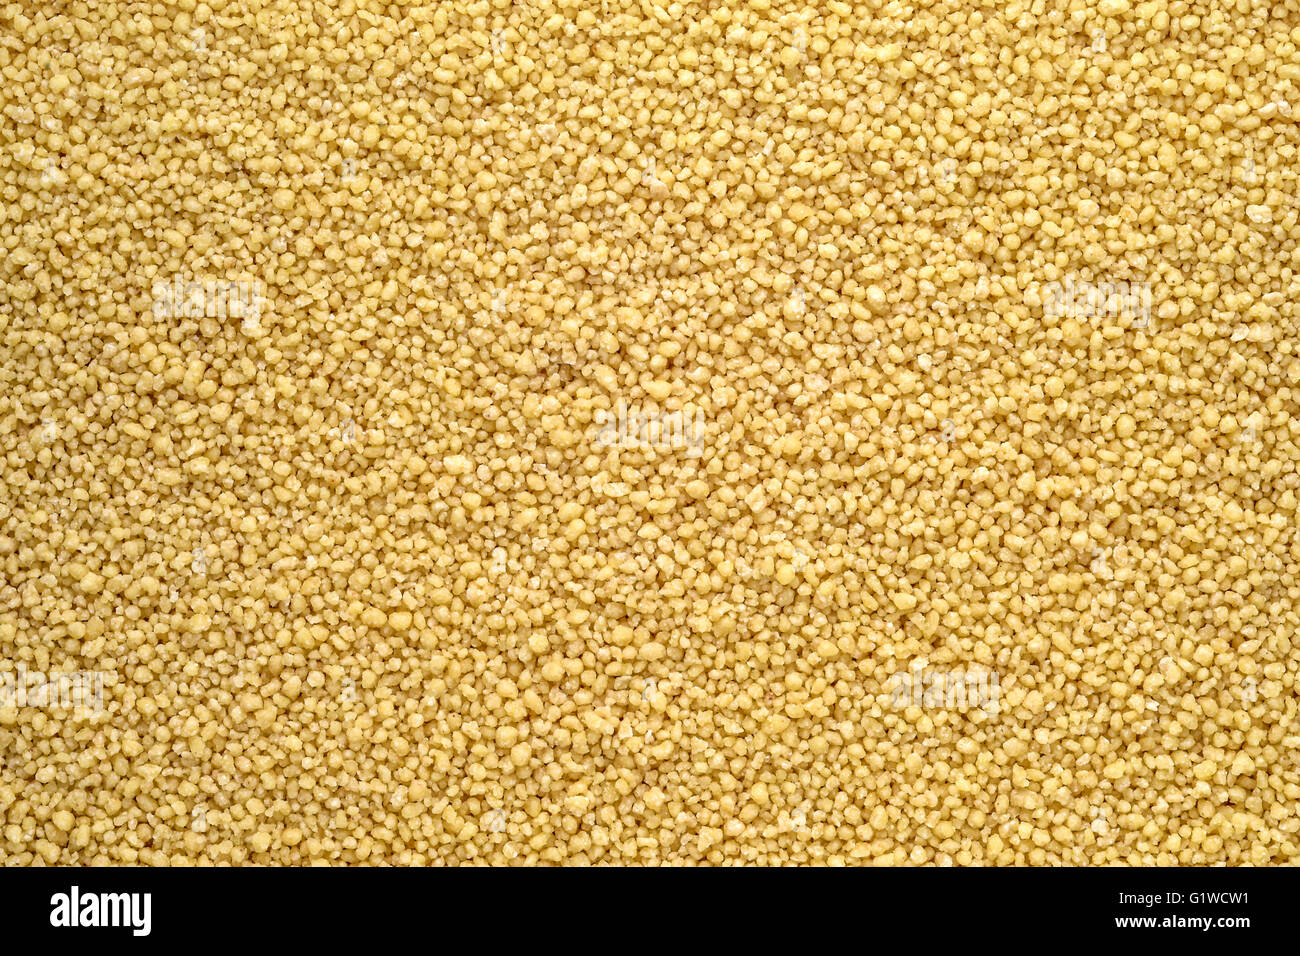 raw couscous background texture closeup Stock Photo